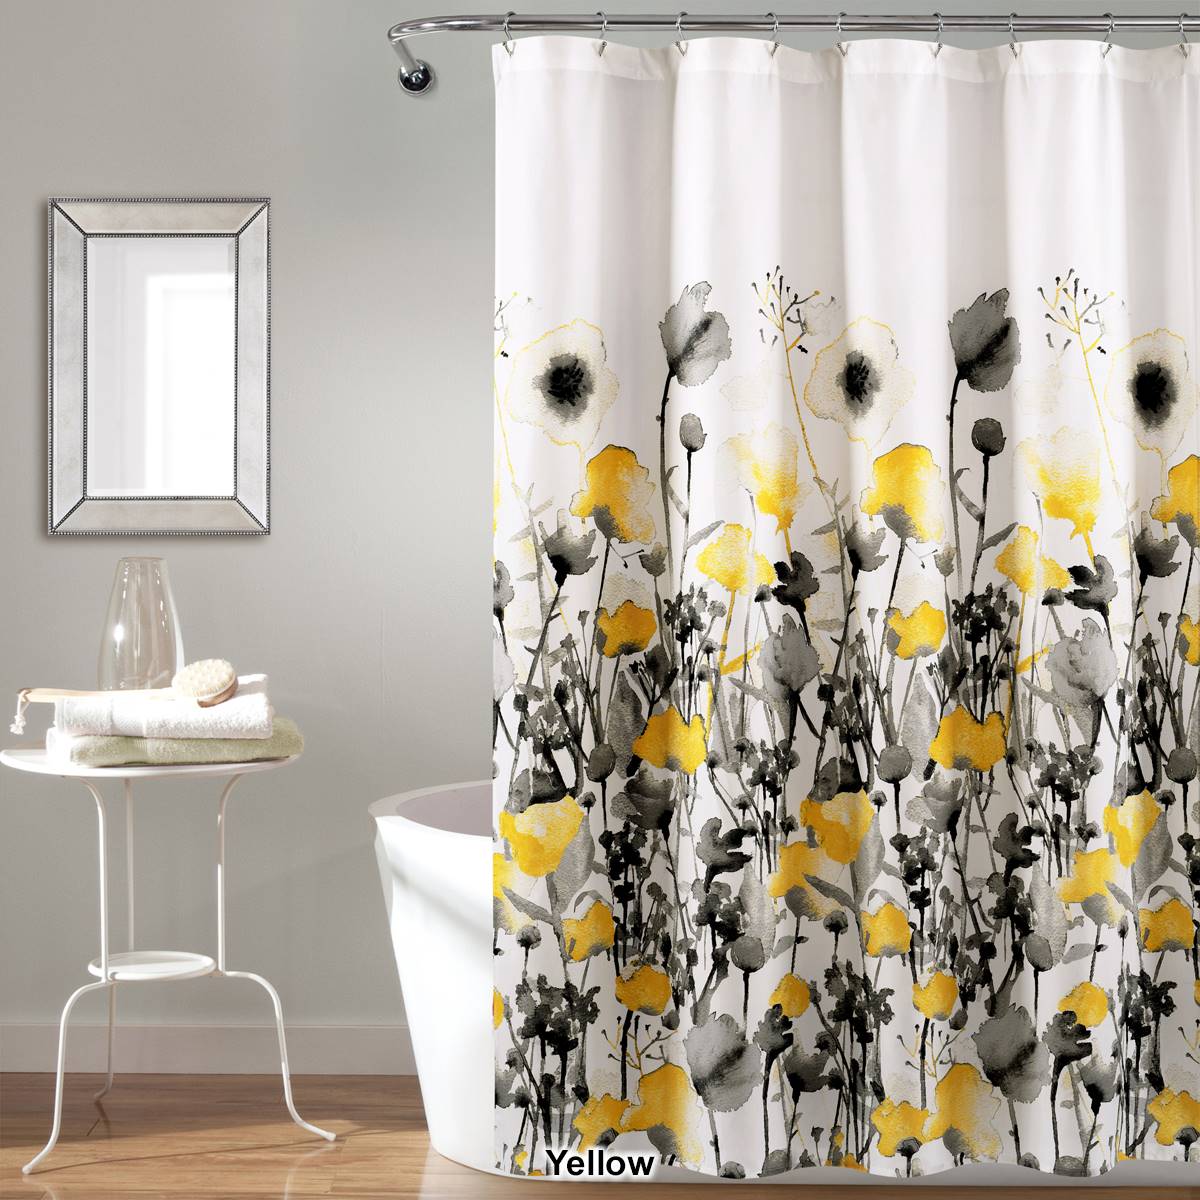 Lush Decor(R) Zuri Flora Shower Curtain